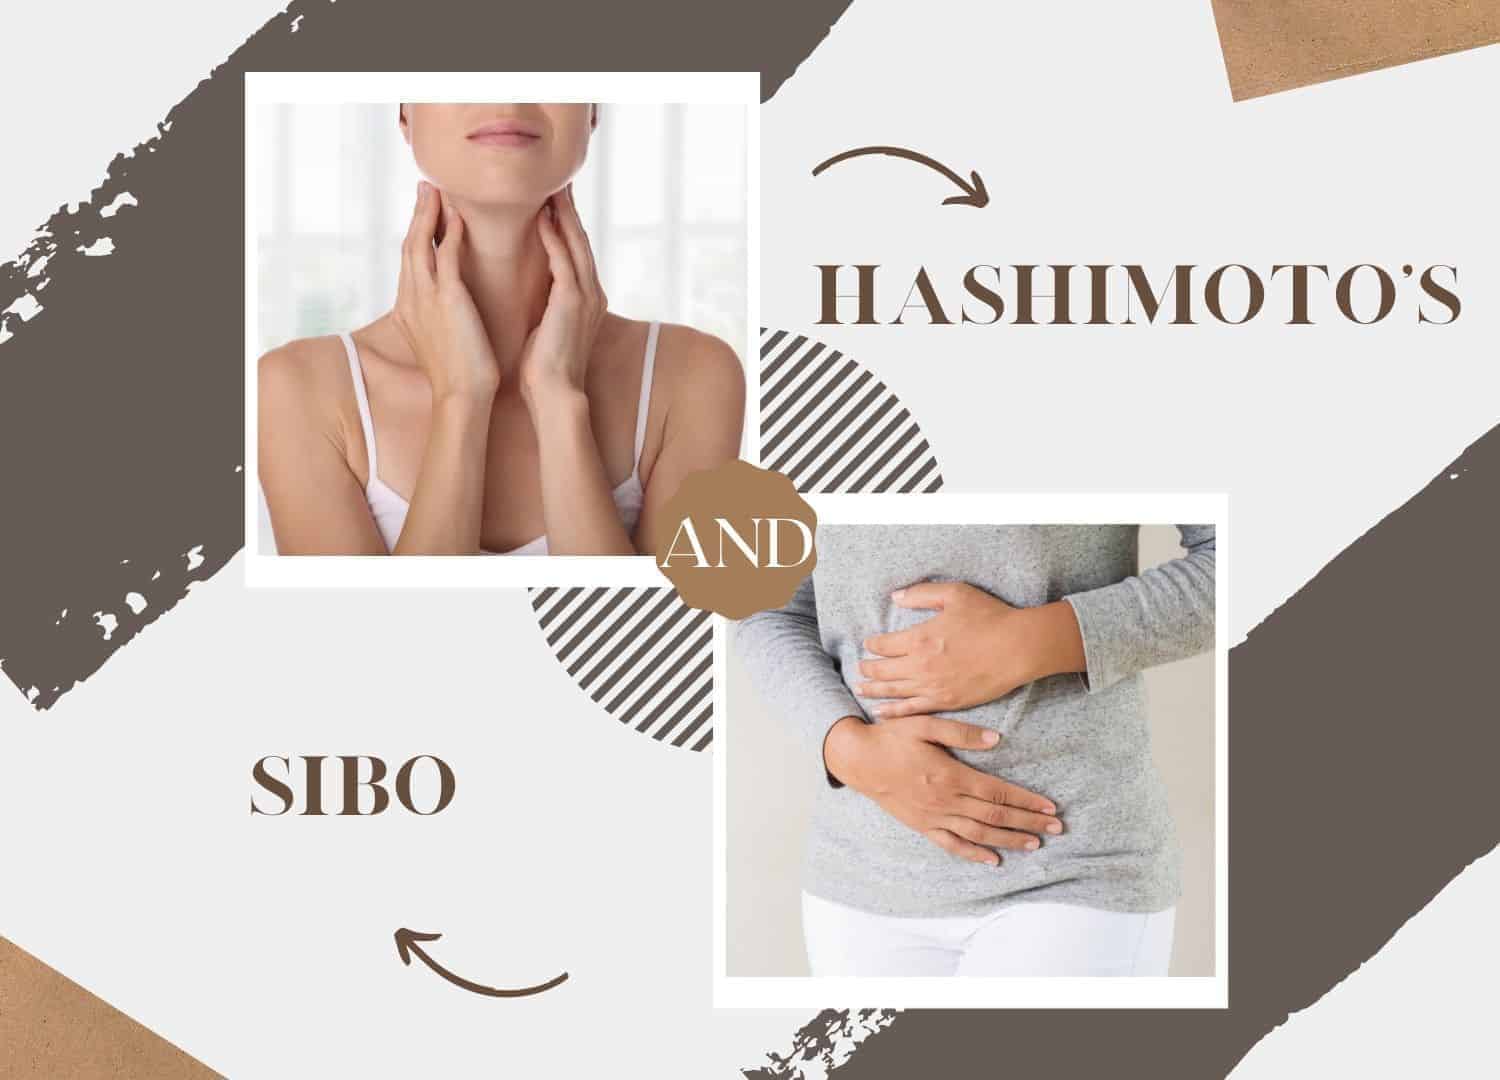 Relationship Between SIBO and Hashimoto’s